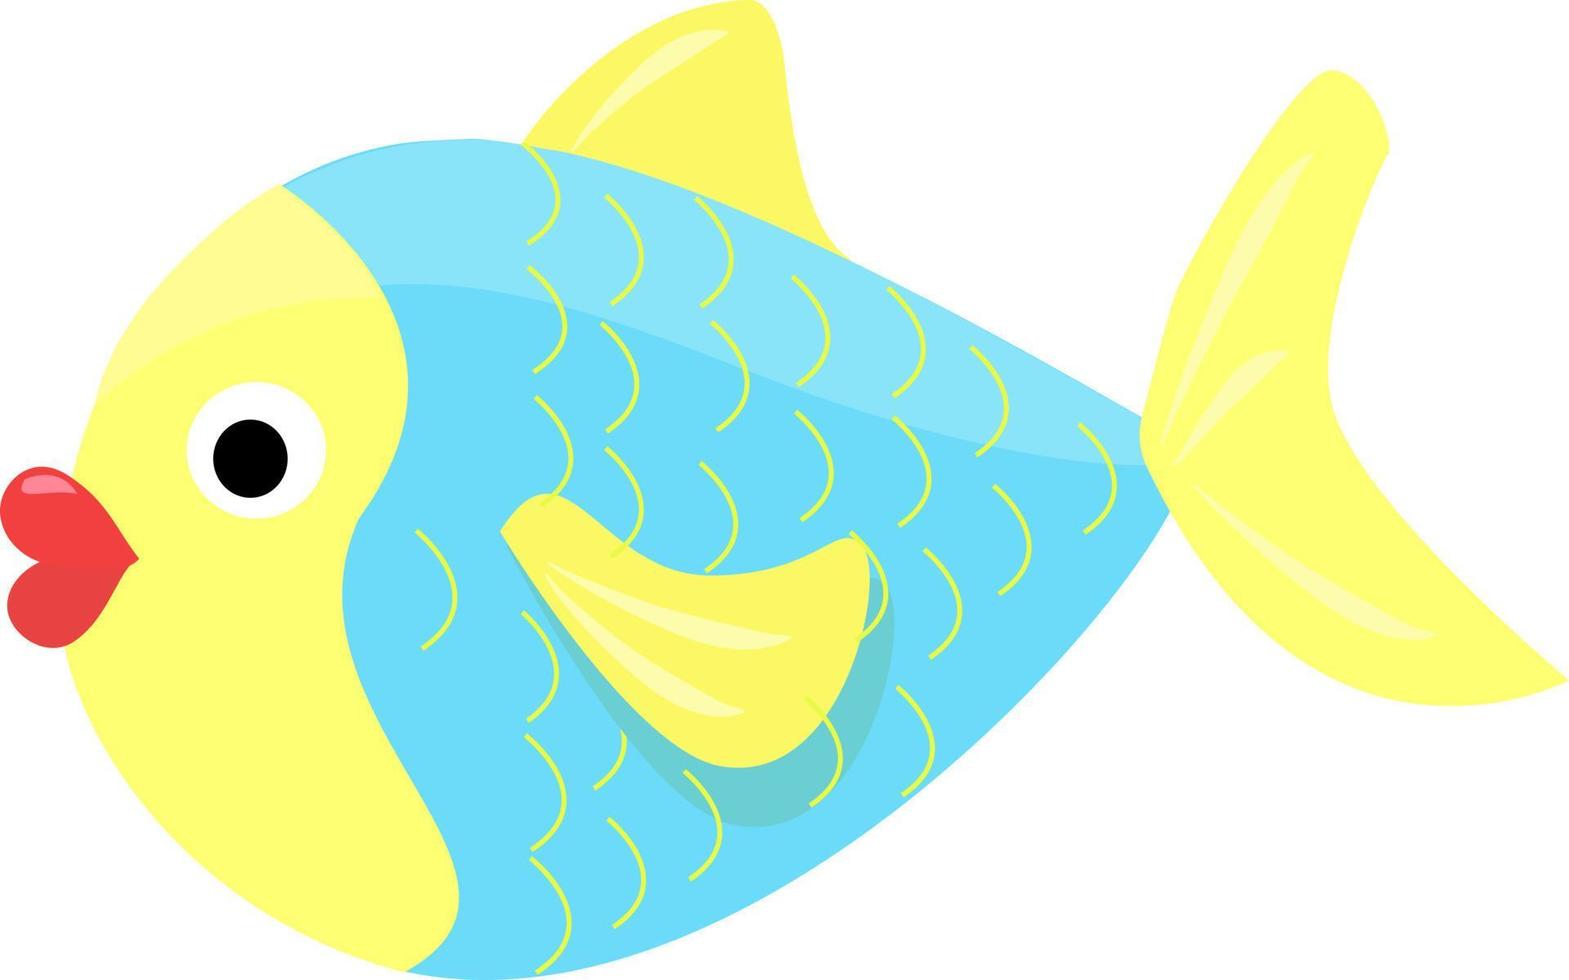 Blue fish, illustration, vector on white background.